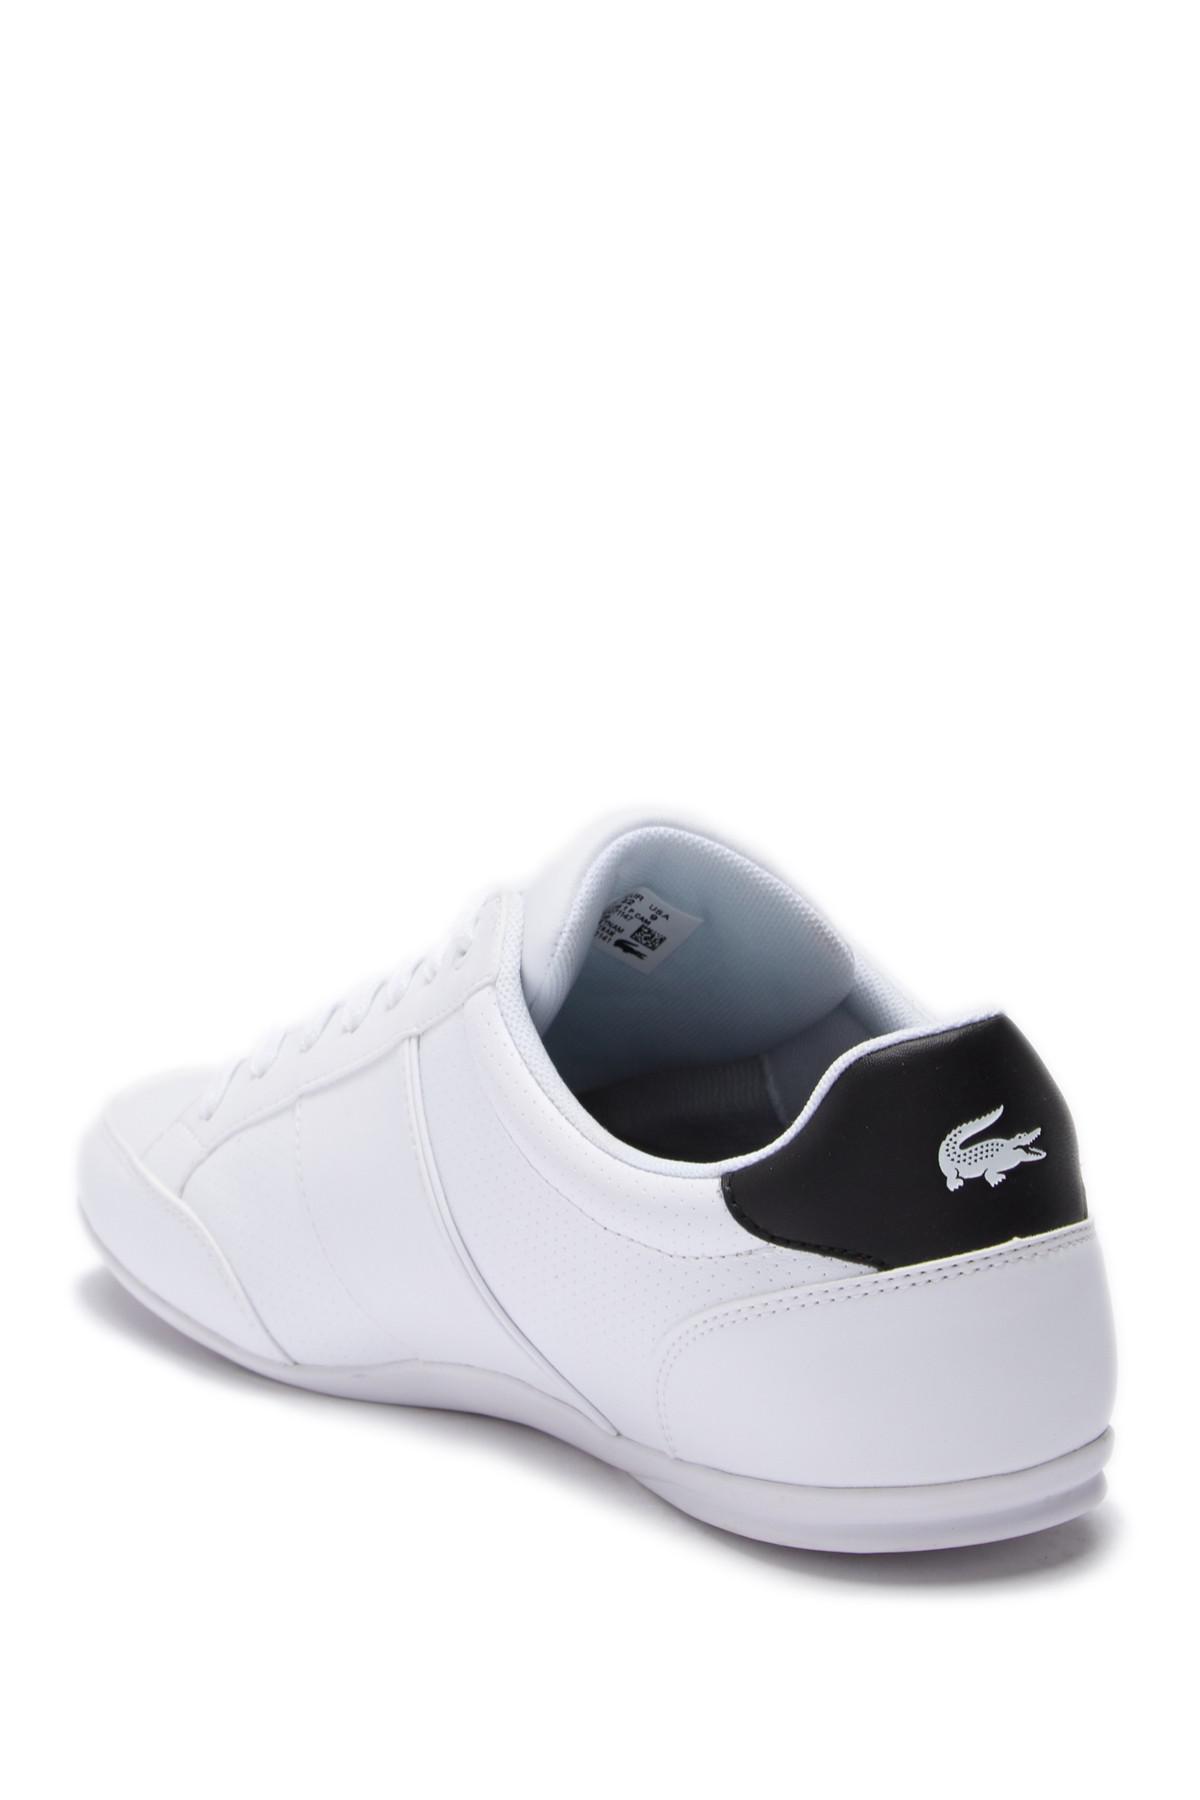 Lacoste Leather Nivolor 318 1 P Sneaker 